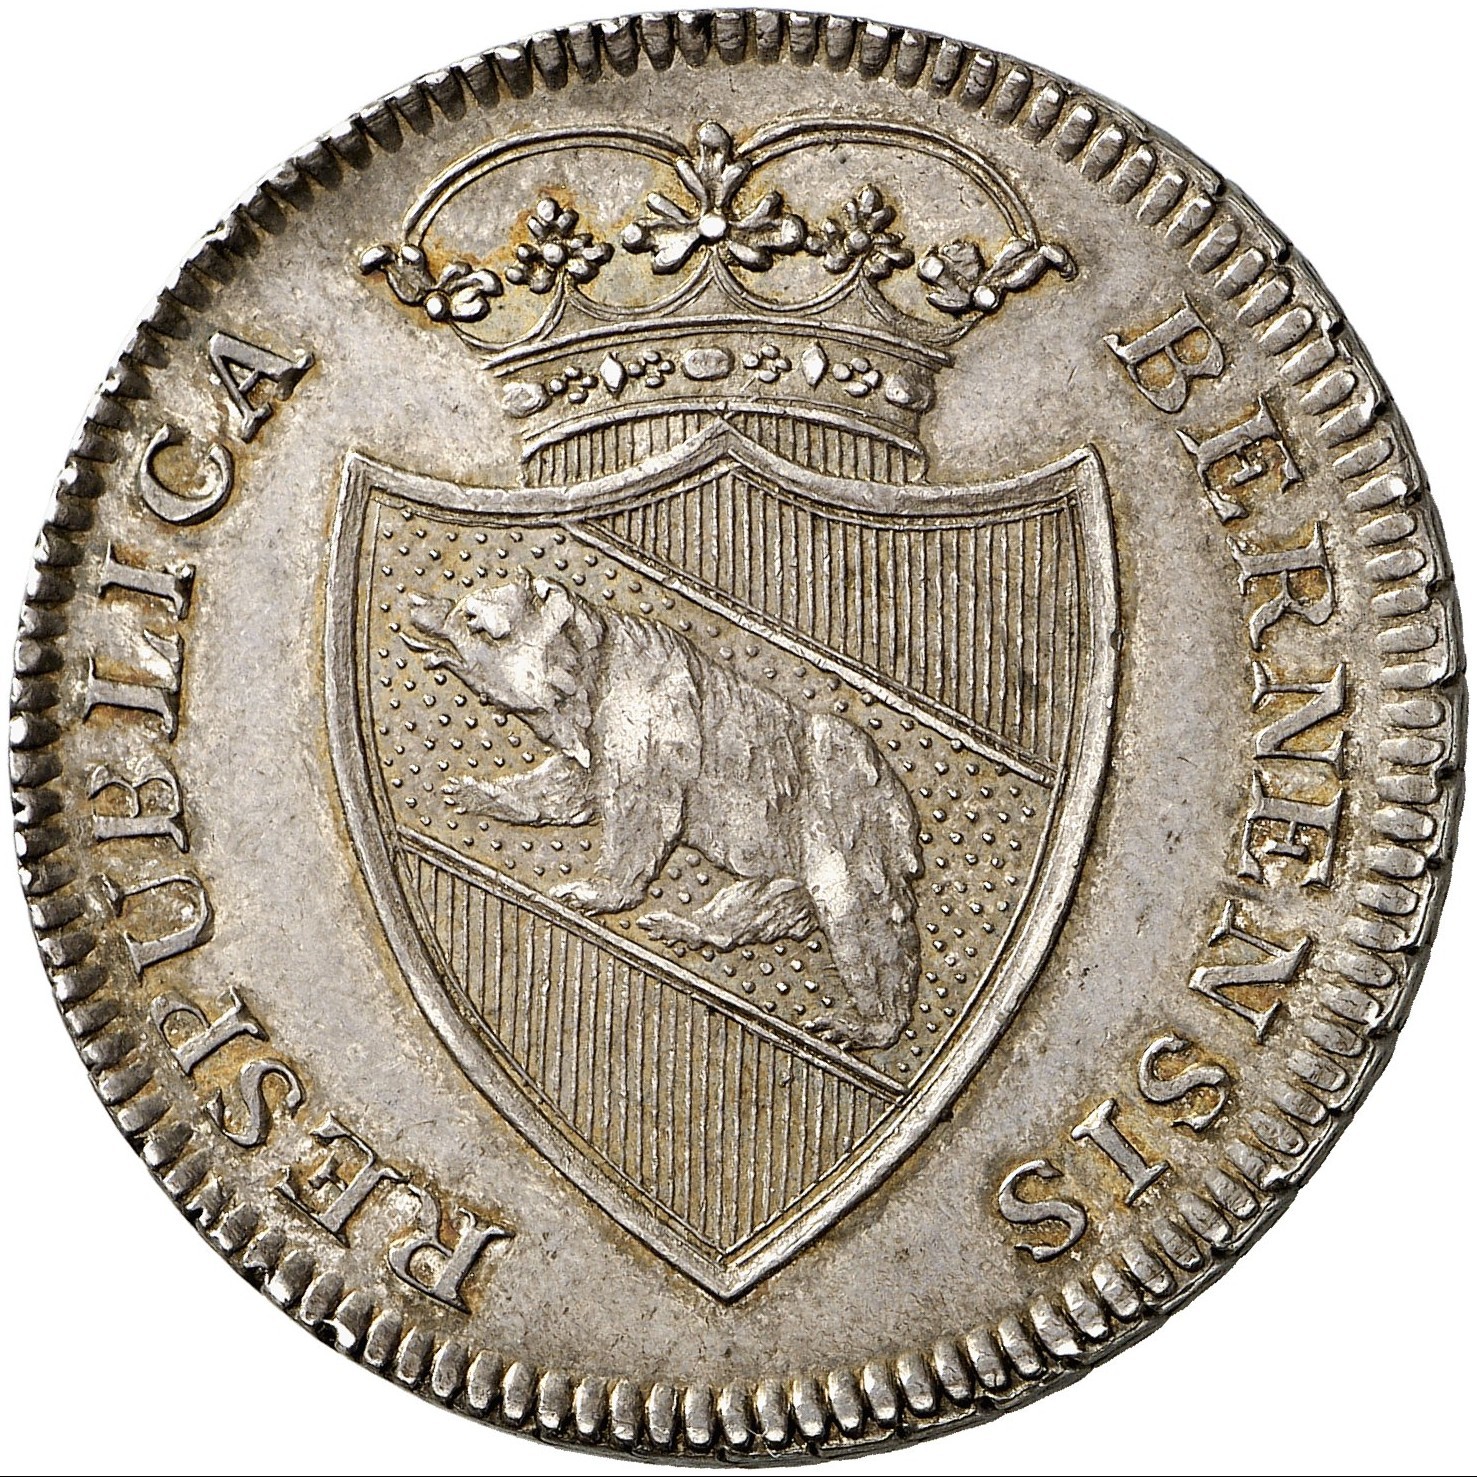 Suisse - Taler - 1795 avers